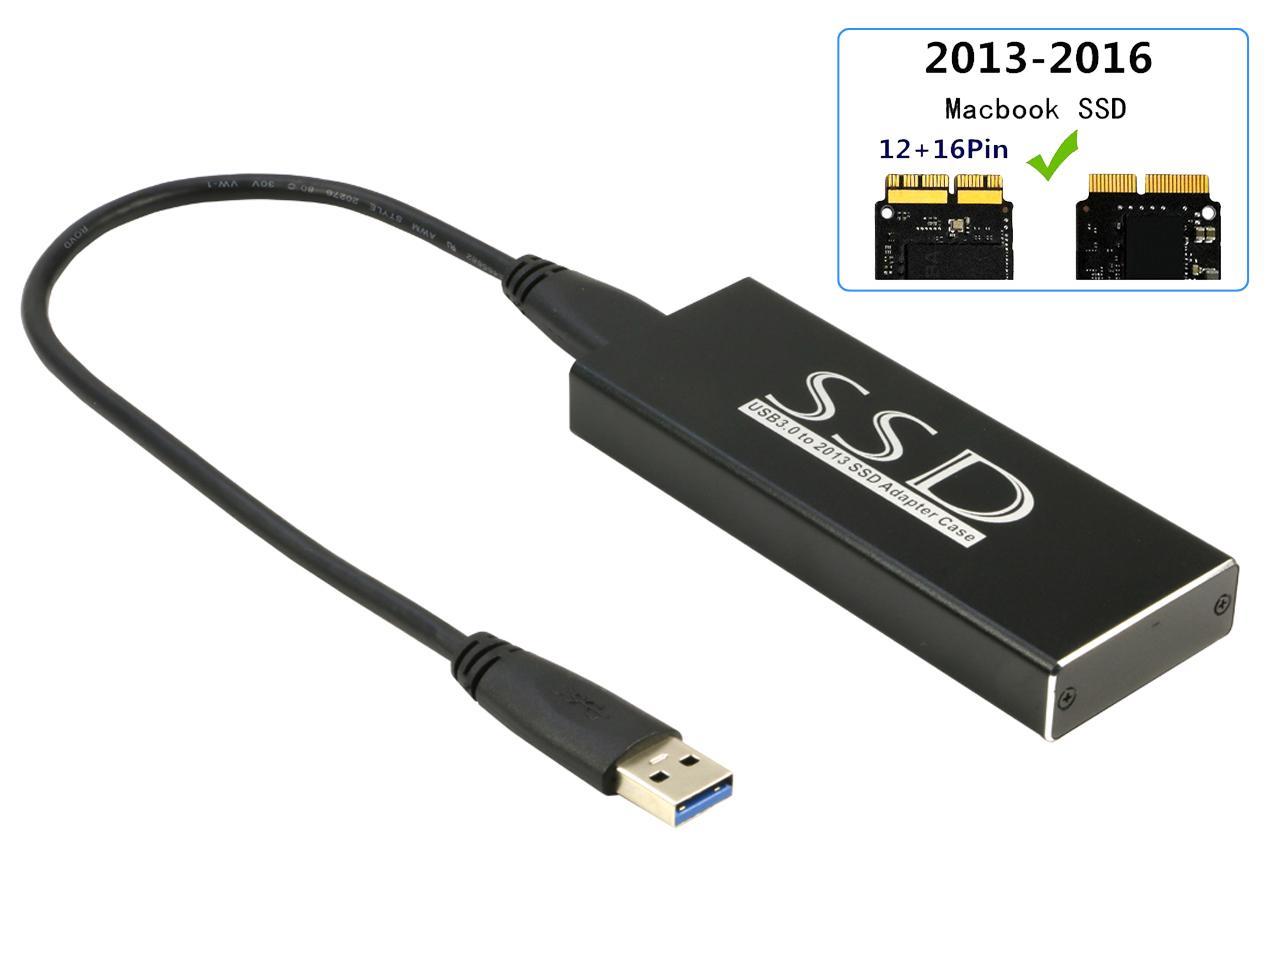 Docooler Gabinete SSD de aleación de Aluminio USB3.0 a Mac para Mac-Book Air/Pro/Retina 2013/2014/2015 